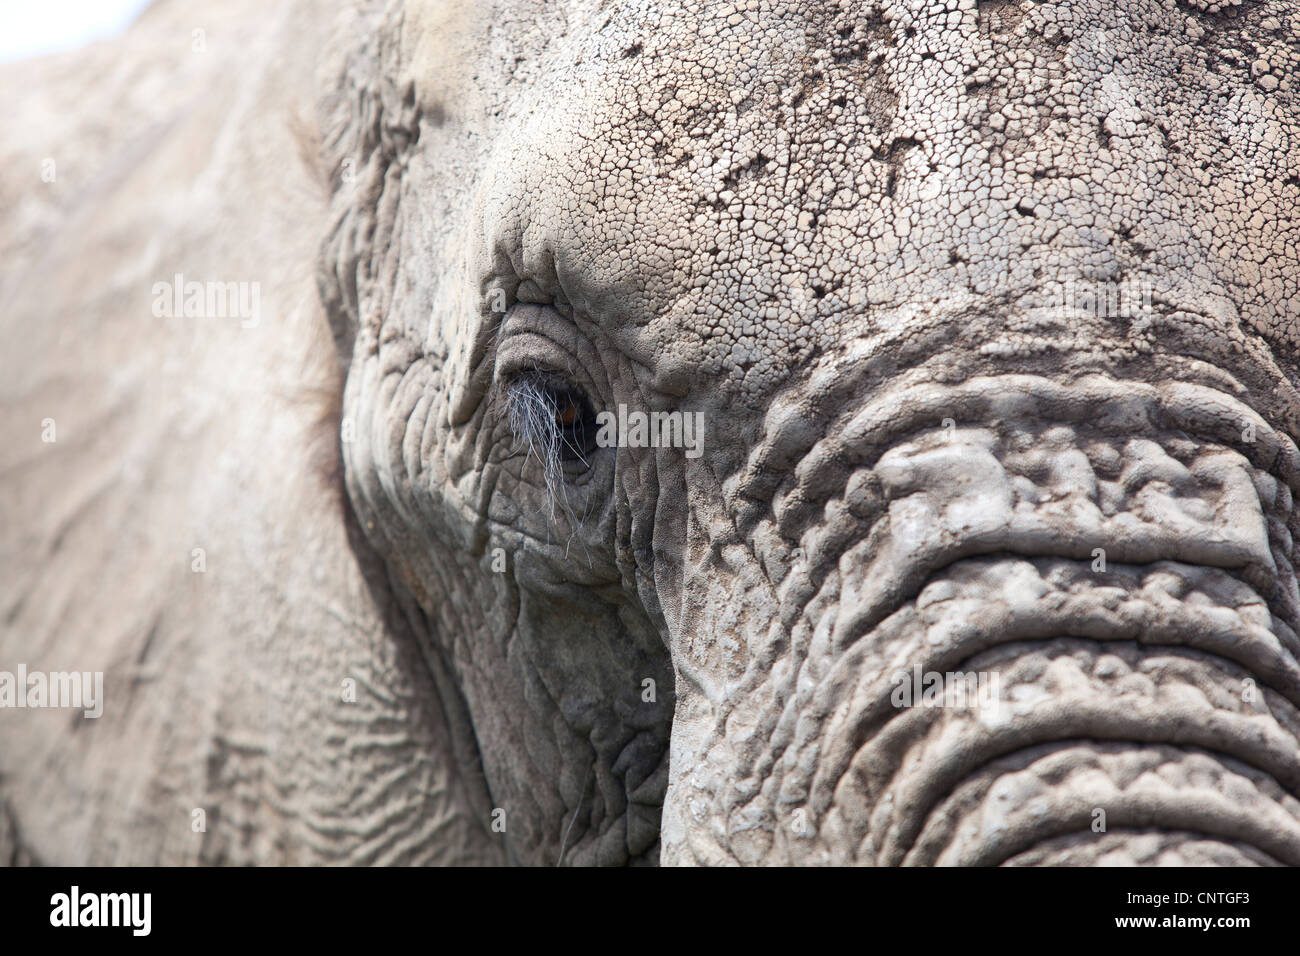 A close up of an elephants head, taken at Knysna Elephant Park, South Africa Stock Photo